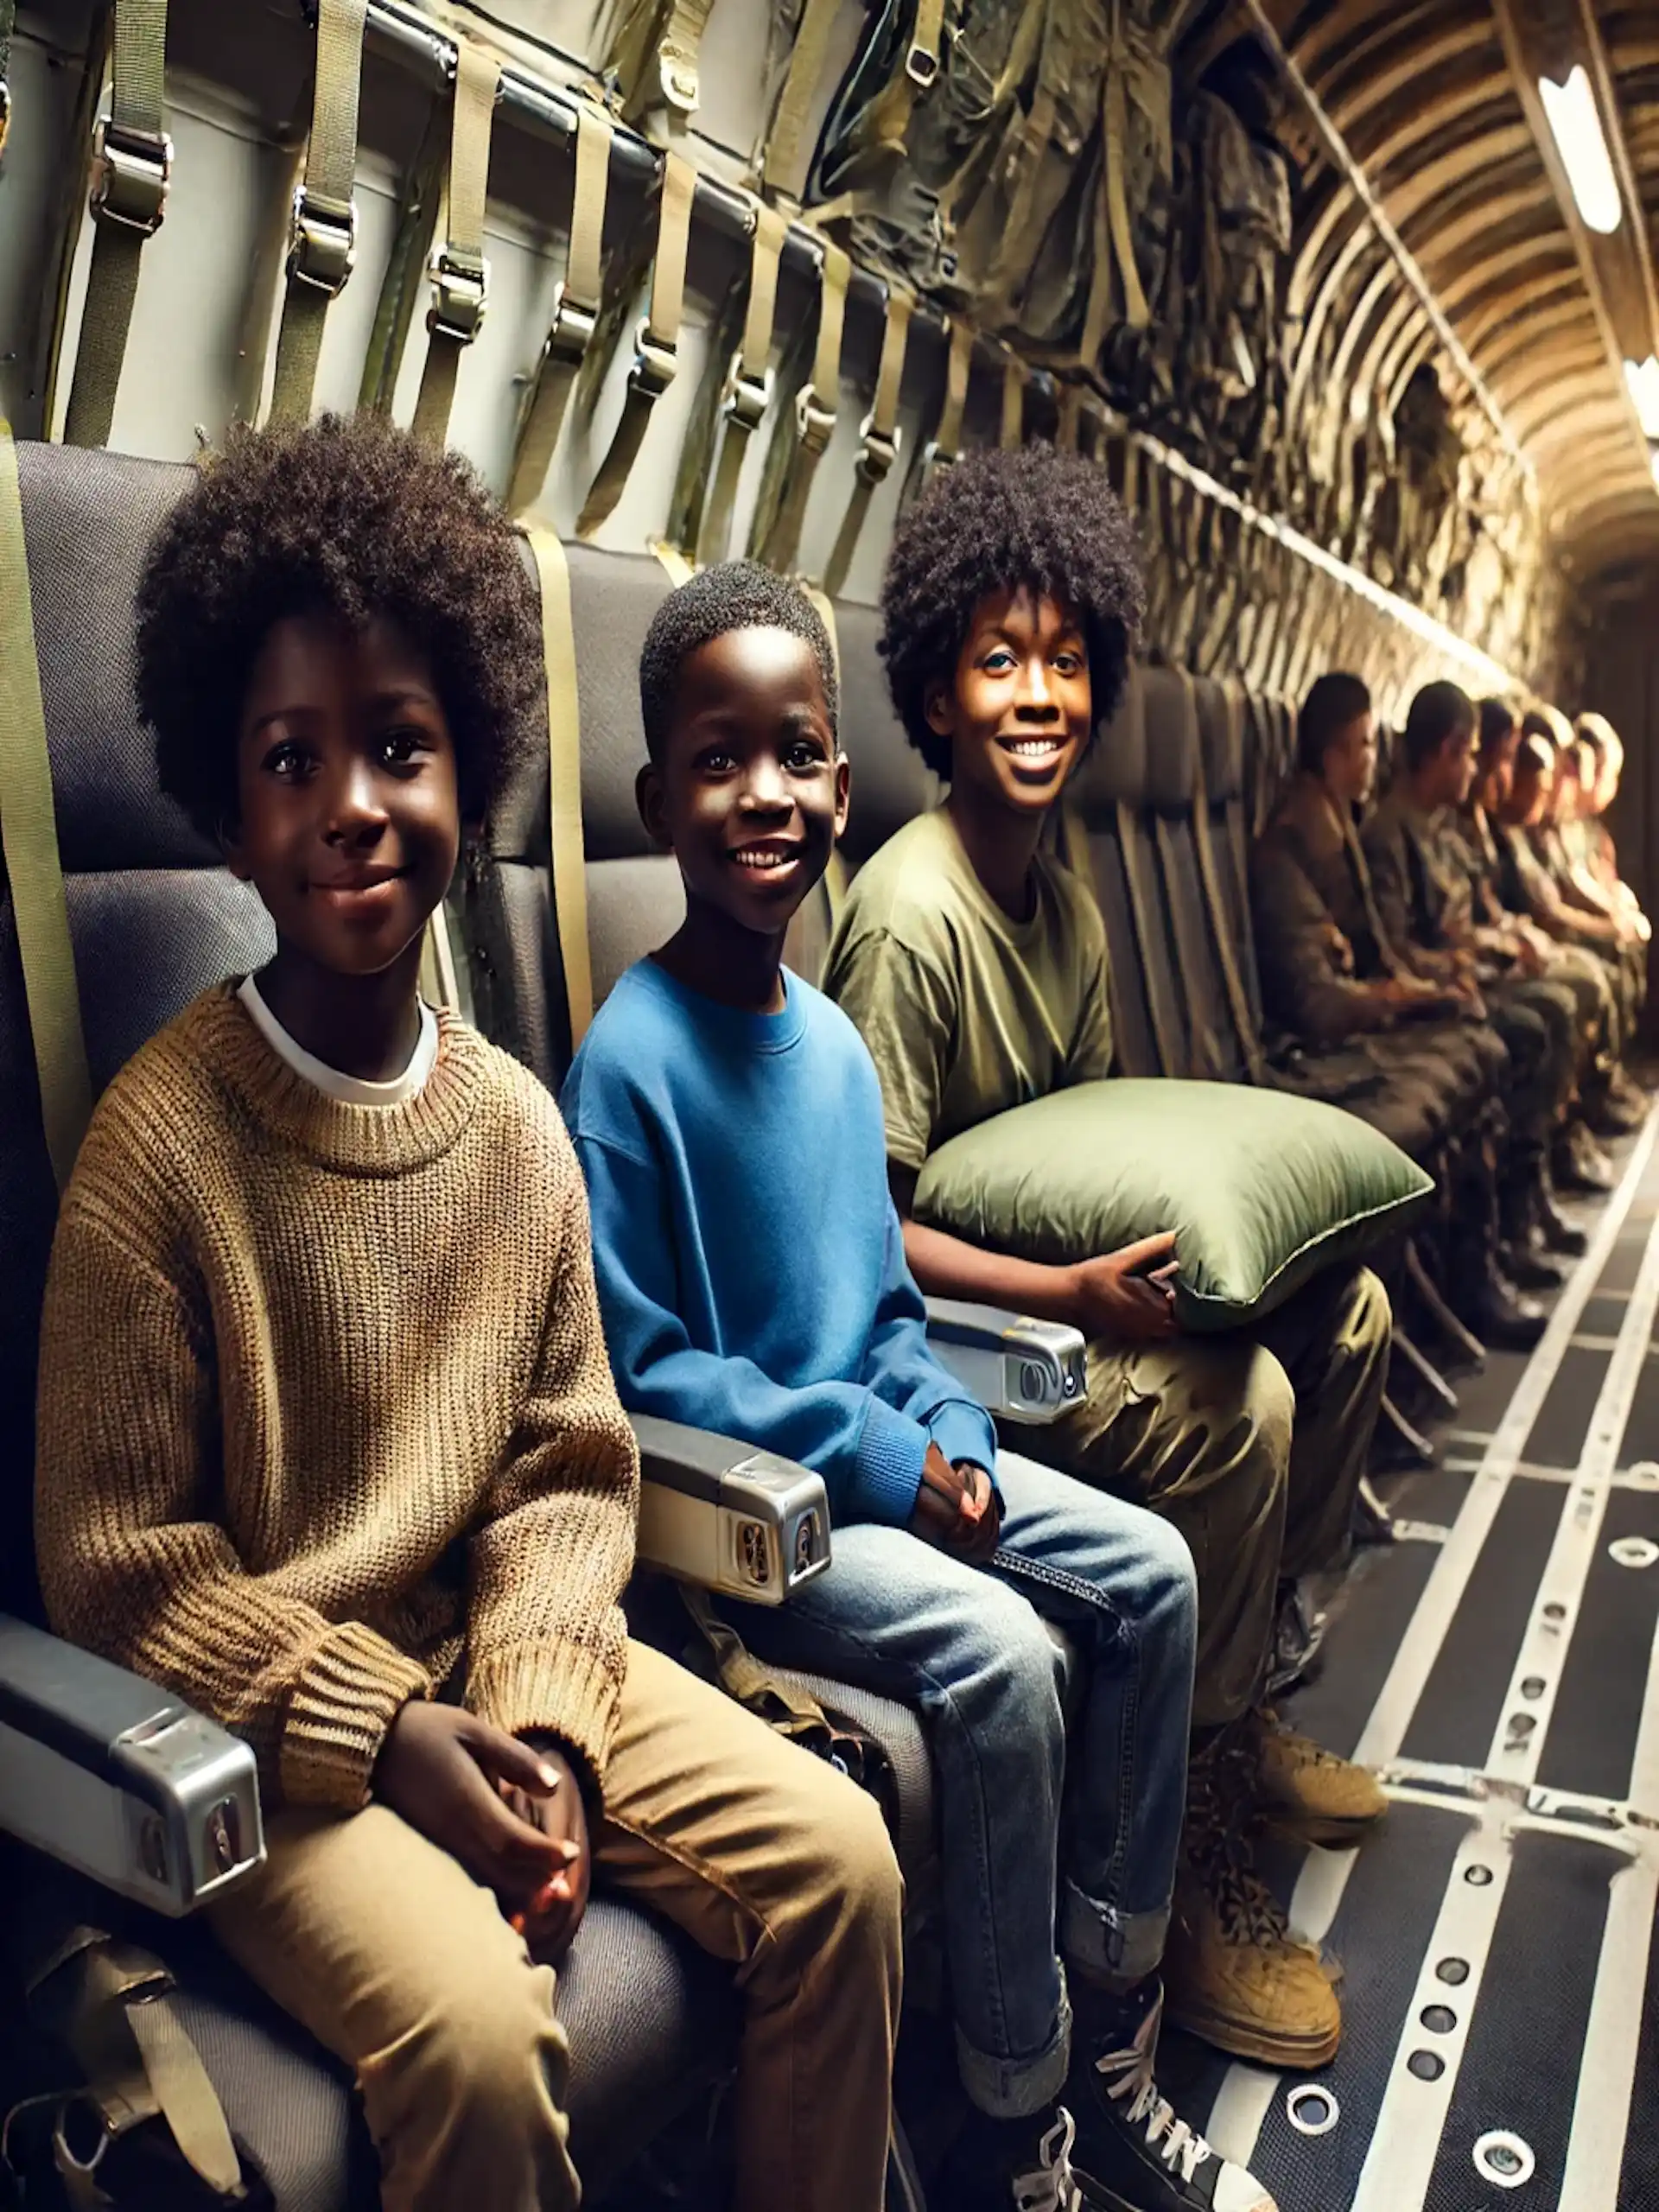 Kids-in-jumpseats-spacea-flight copy